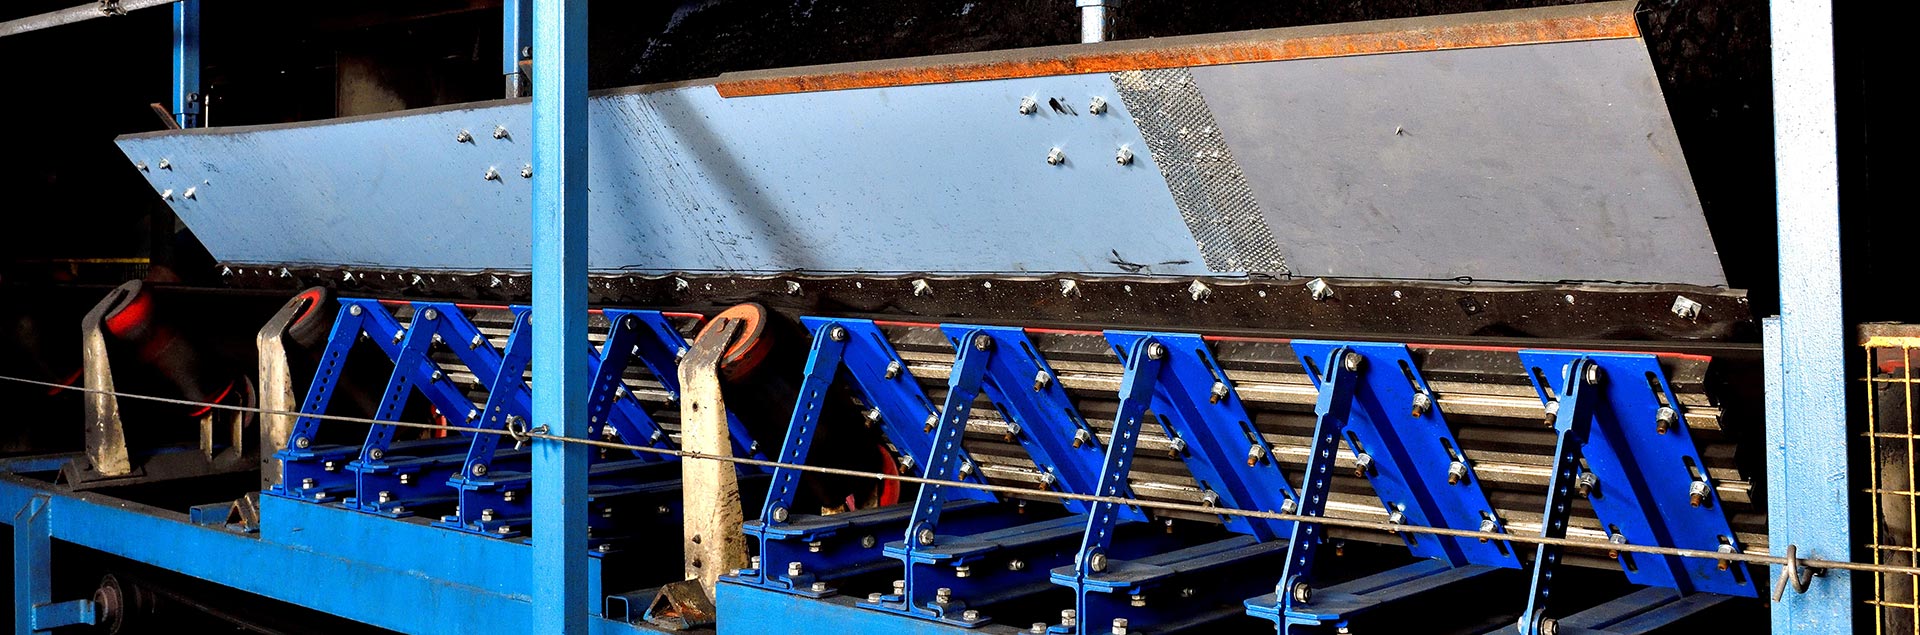 Conveyor loading systems